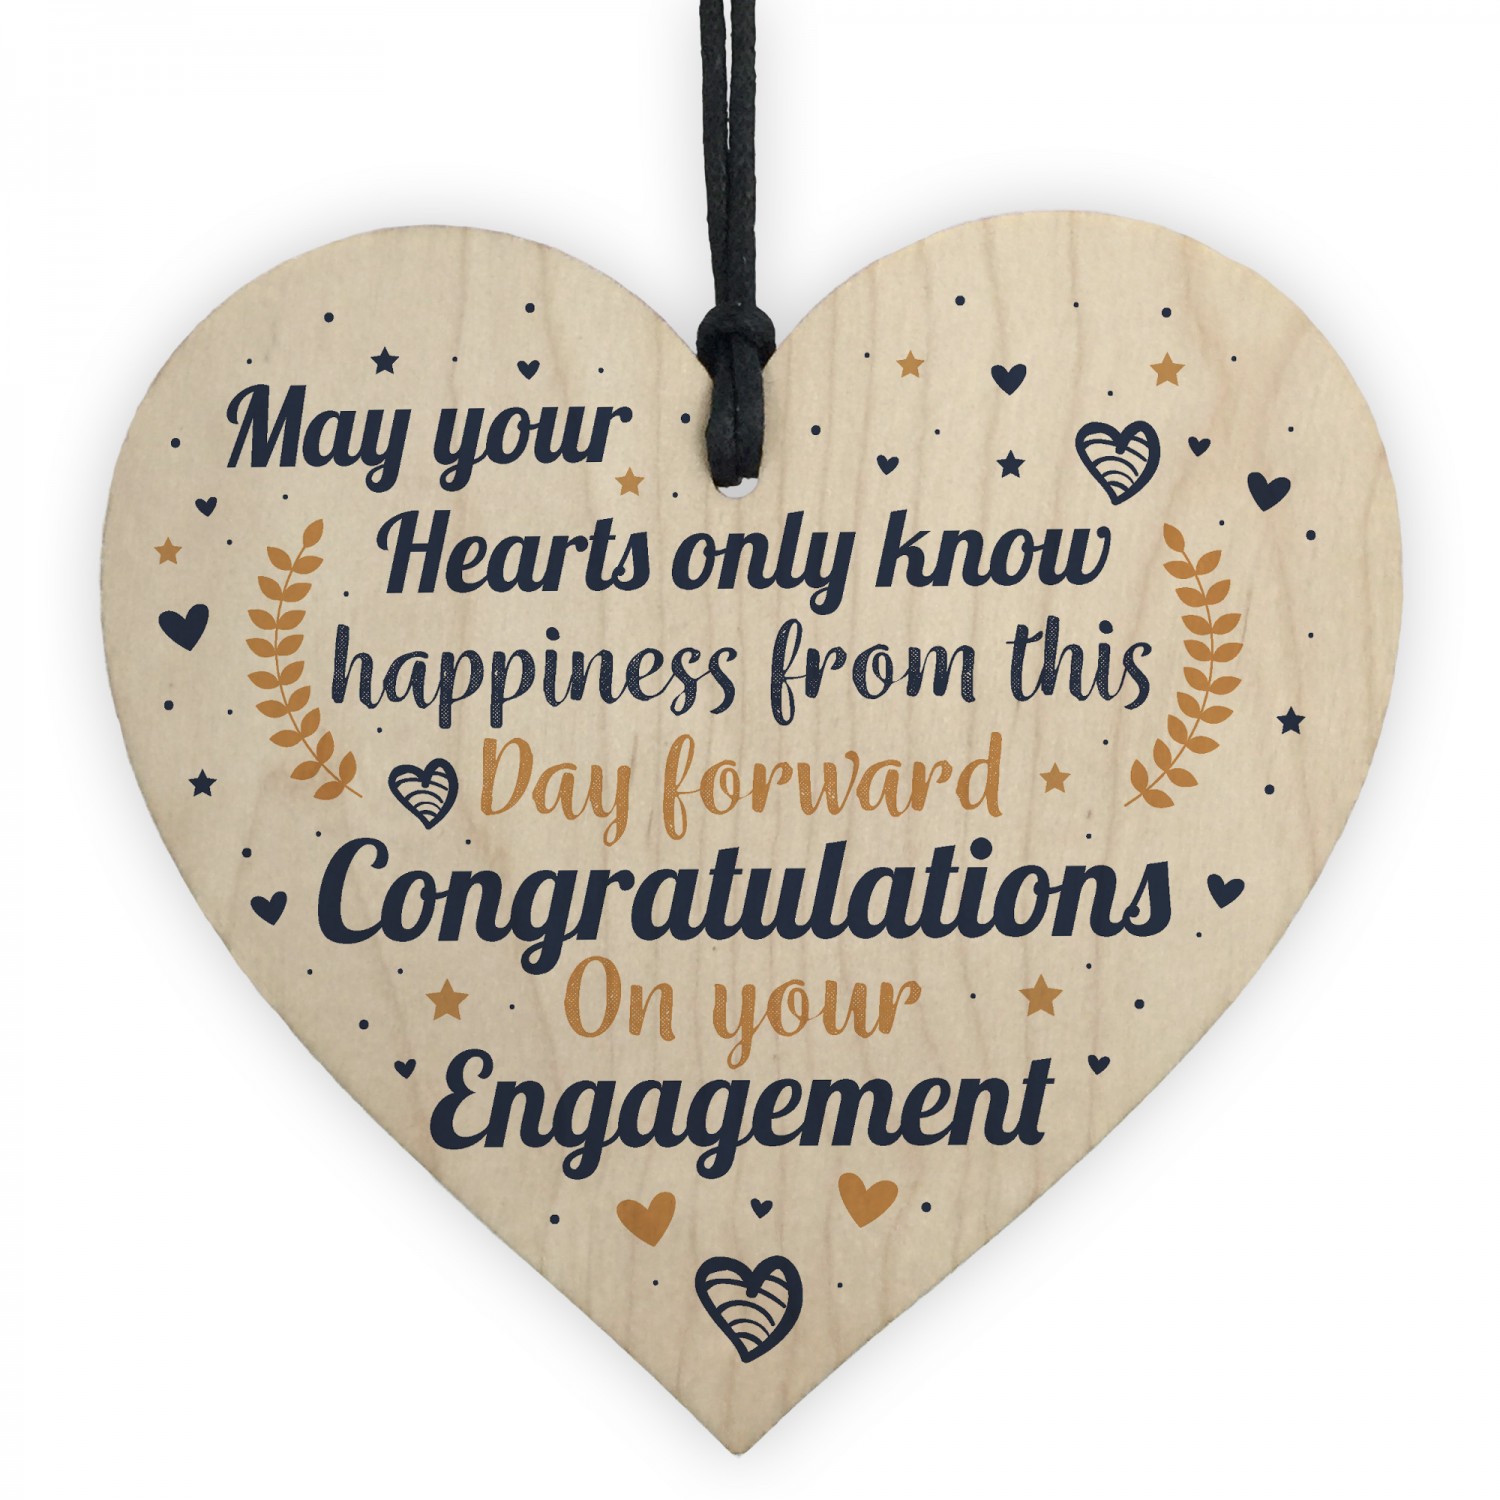 Engagement congratulations gift